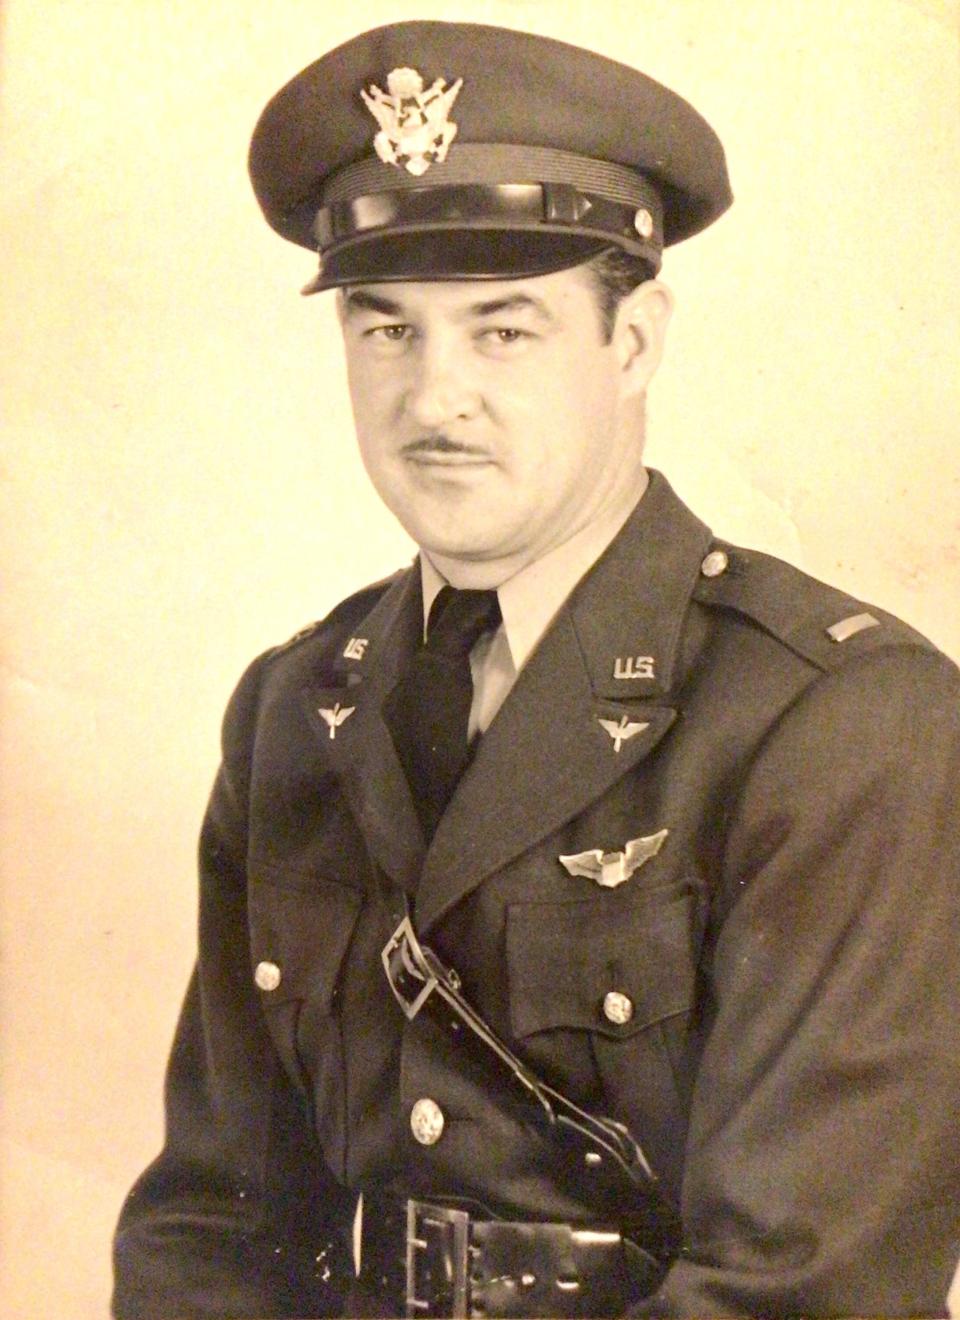 Then-Lt. John Barrett, around 1941.